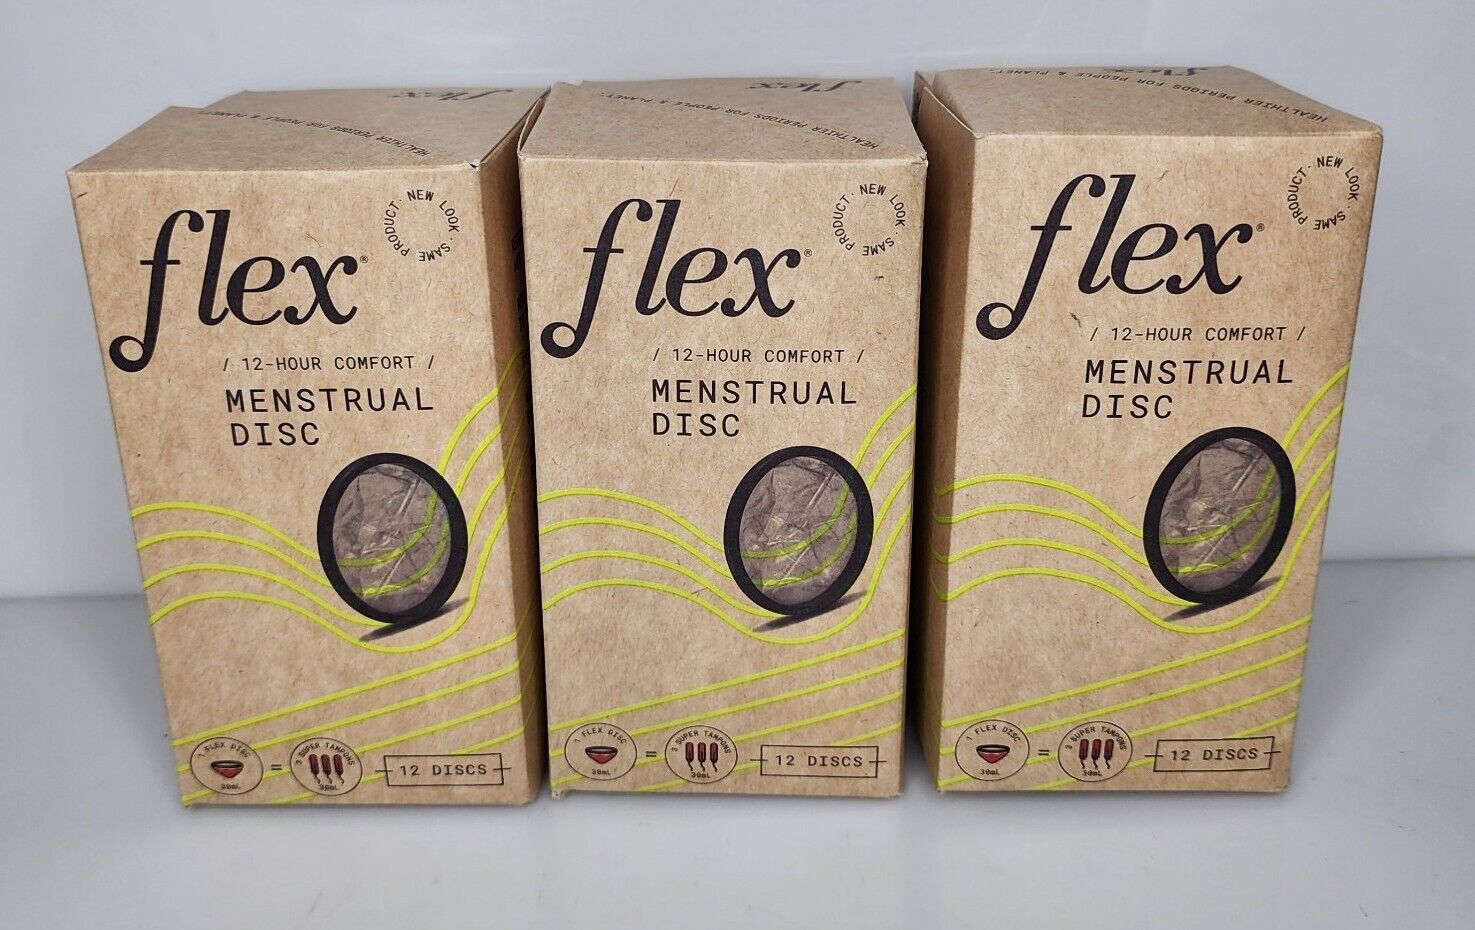 Flex 12-hour Comfort Menstrual Disc - 3 Packs Of 12 (36 Total Discs)